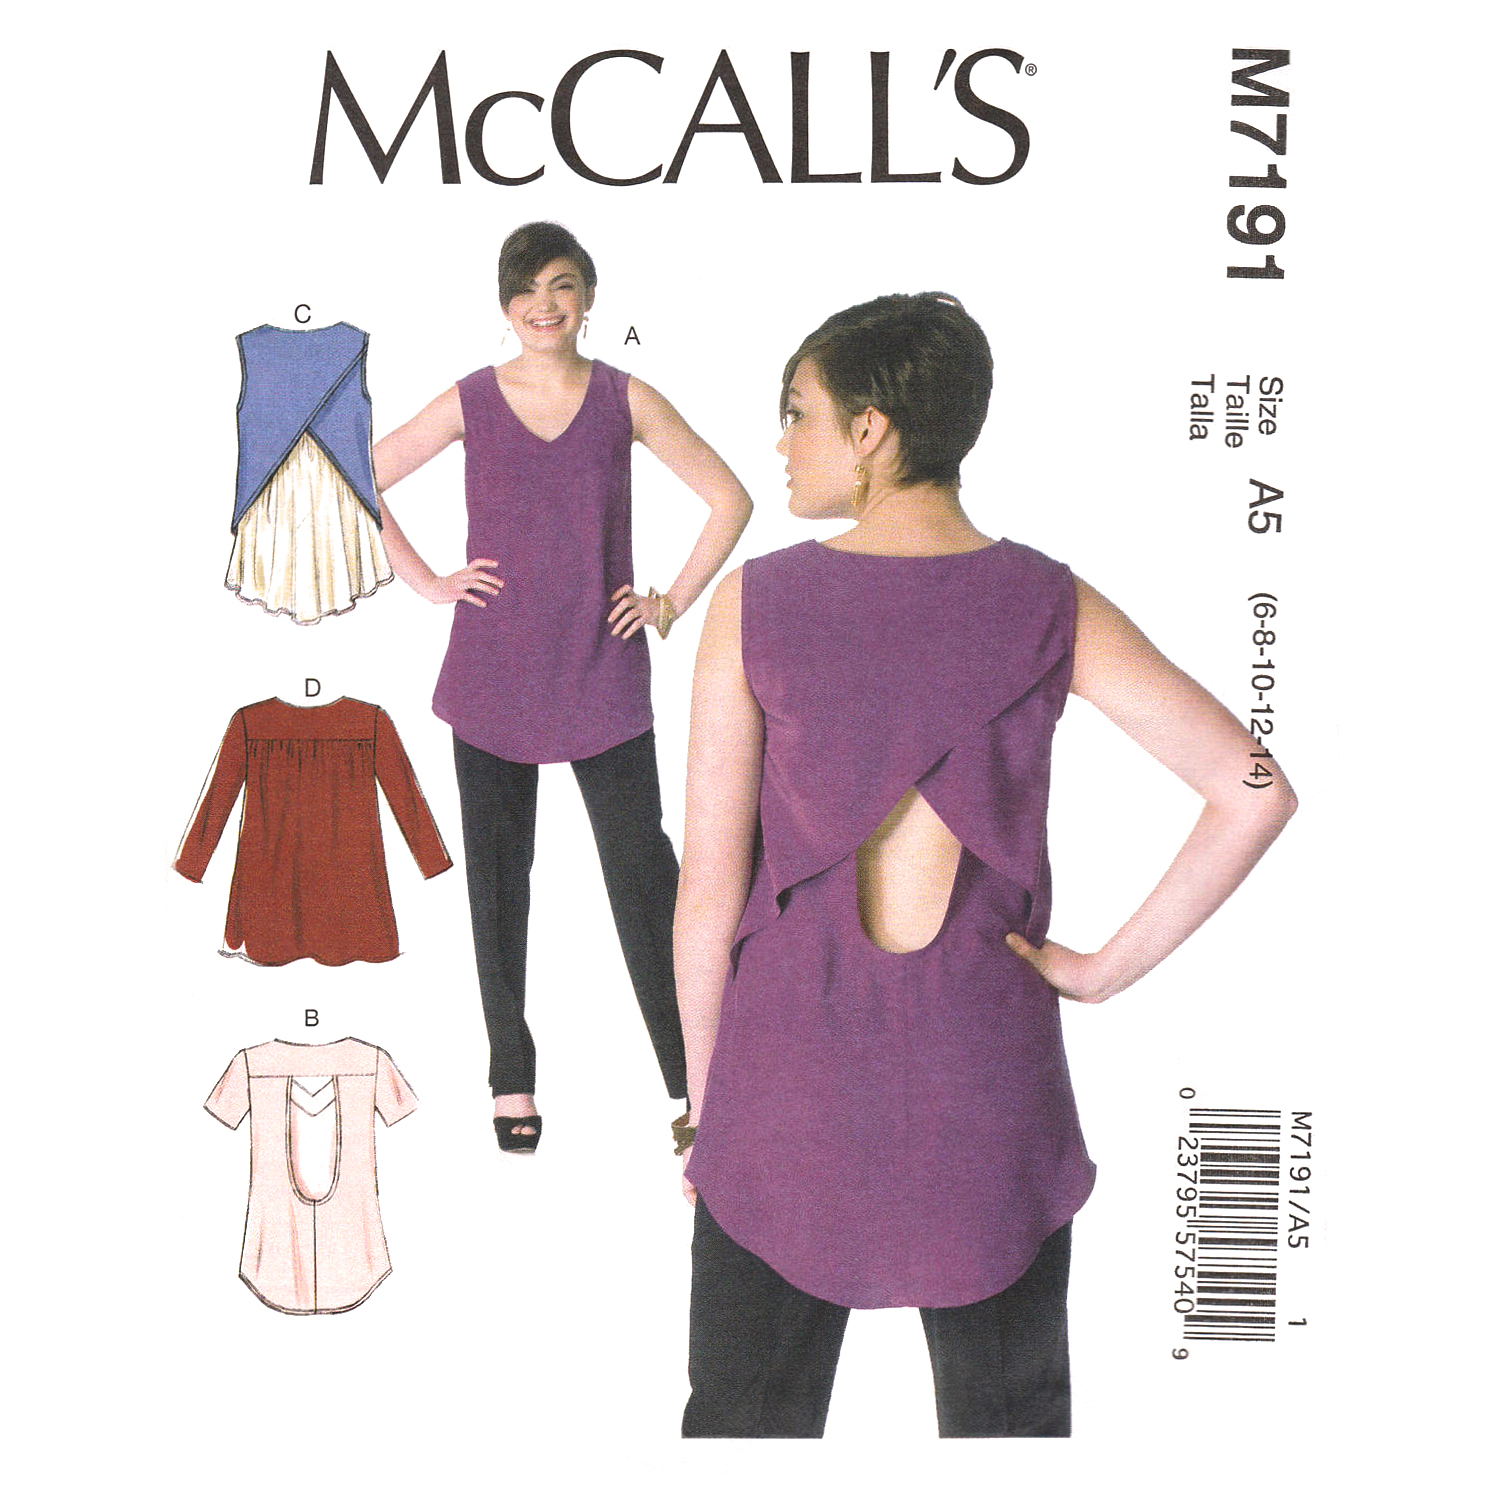 McCalls 7191 top pattern